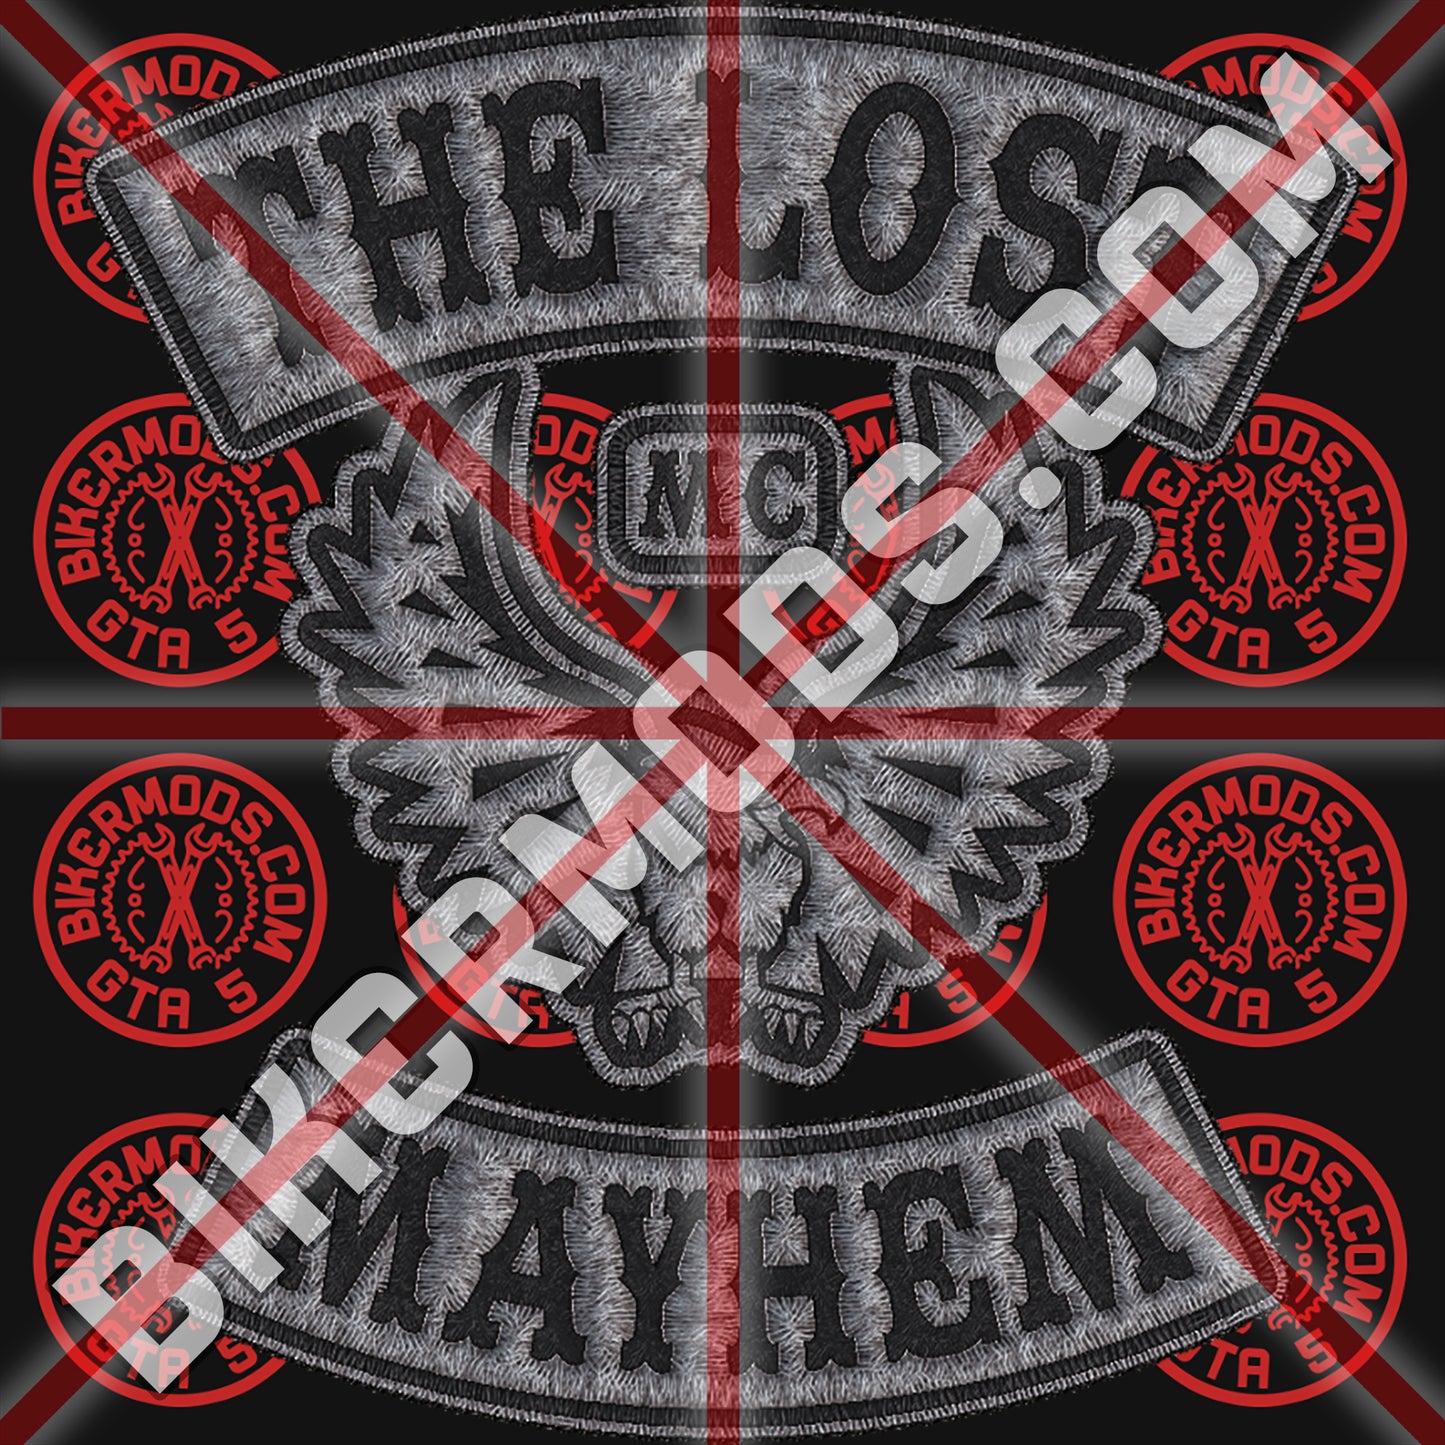 The Lost MC (Mayhem) Westcoast Style